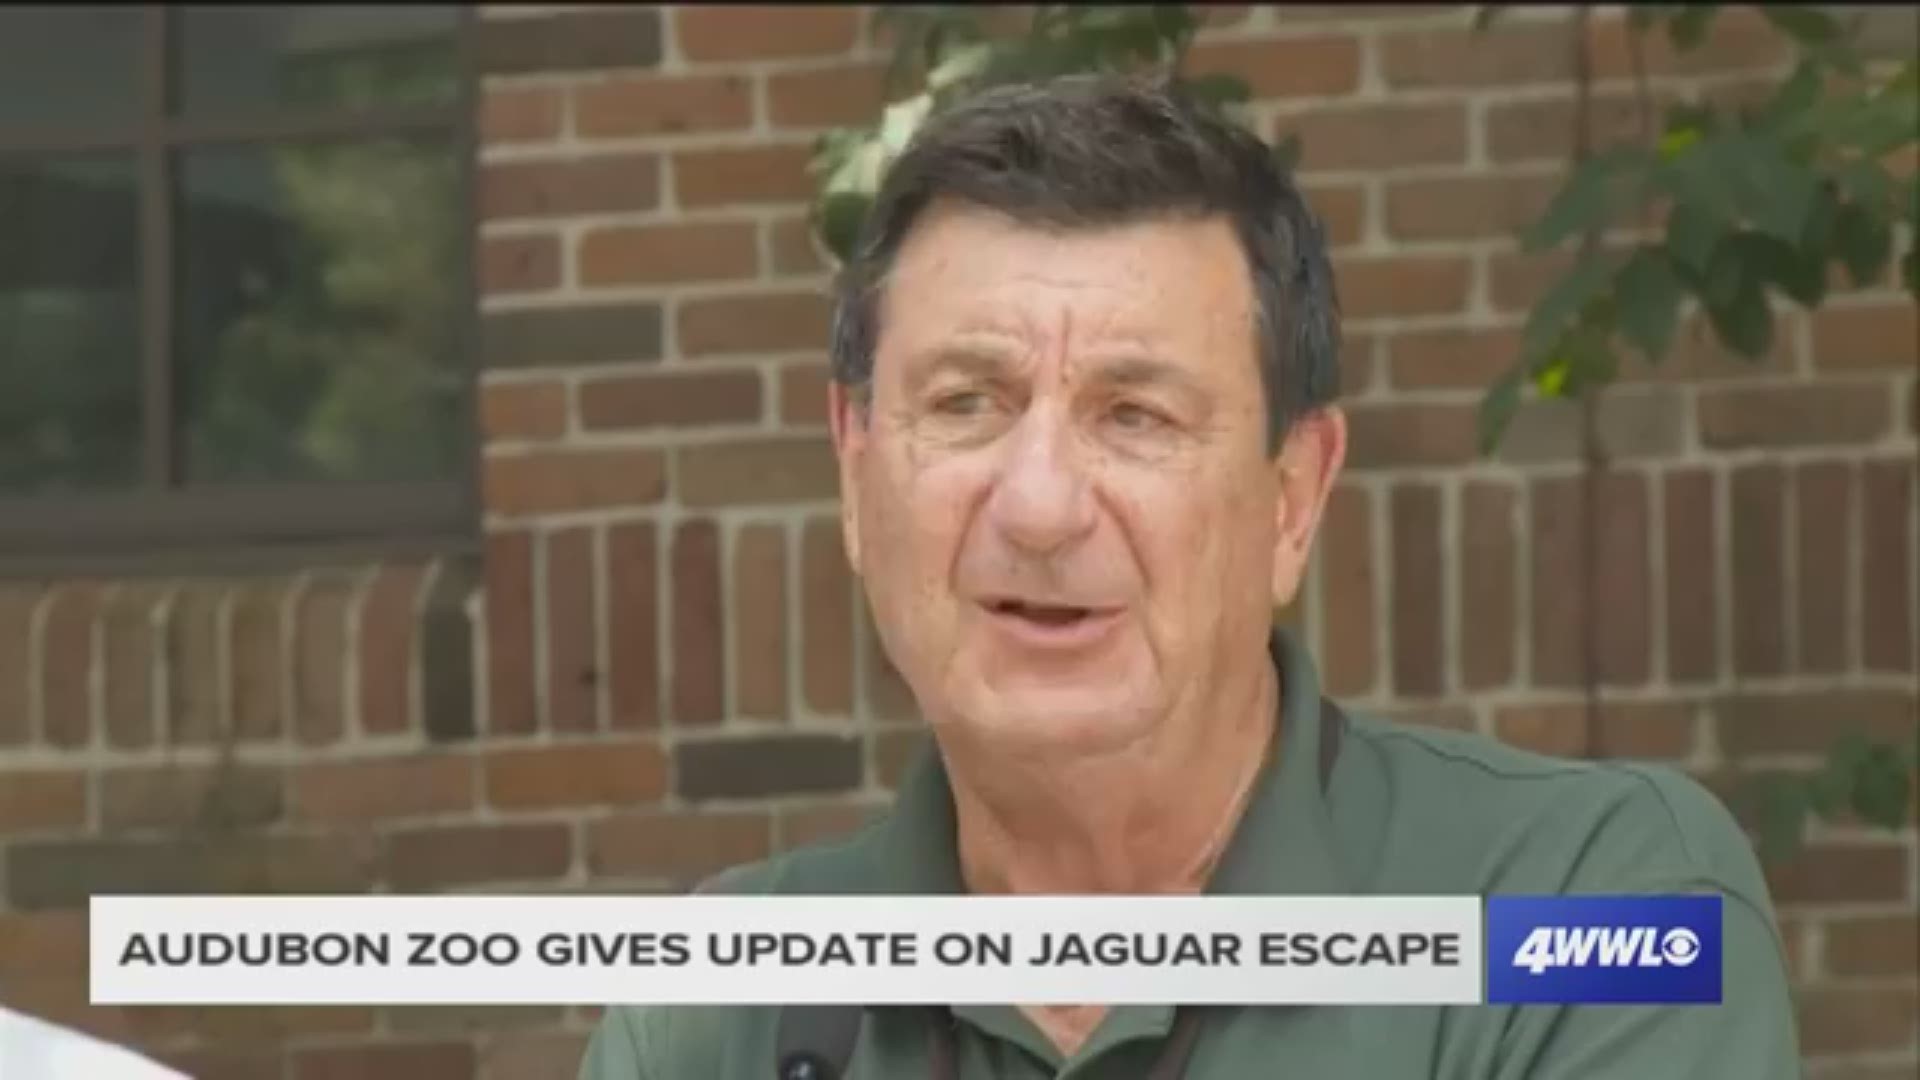 Audubon Zoo officials give update after jaguar escapes enclosure, killing 6 other animals.